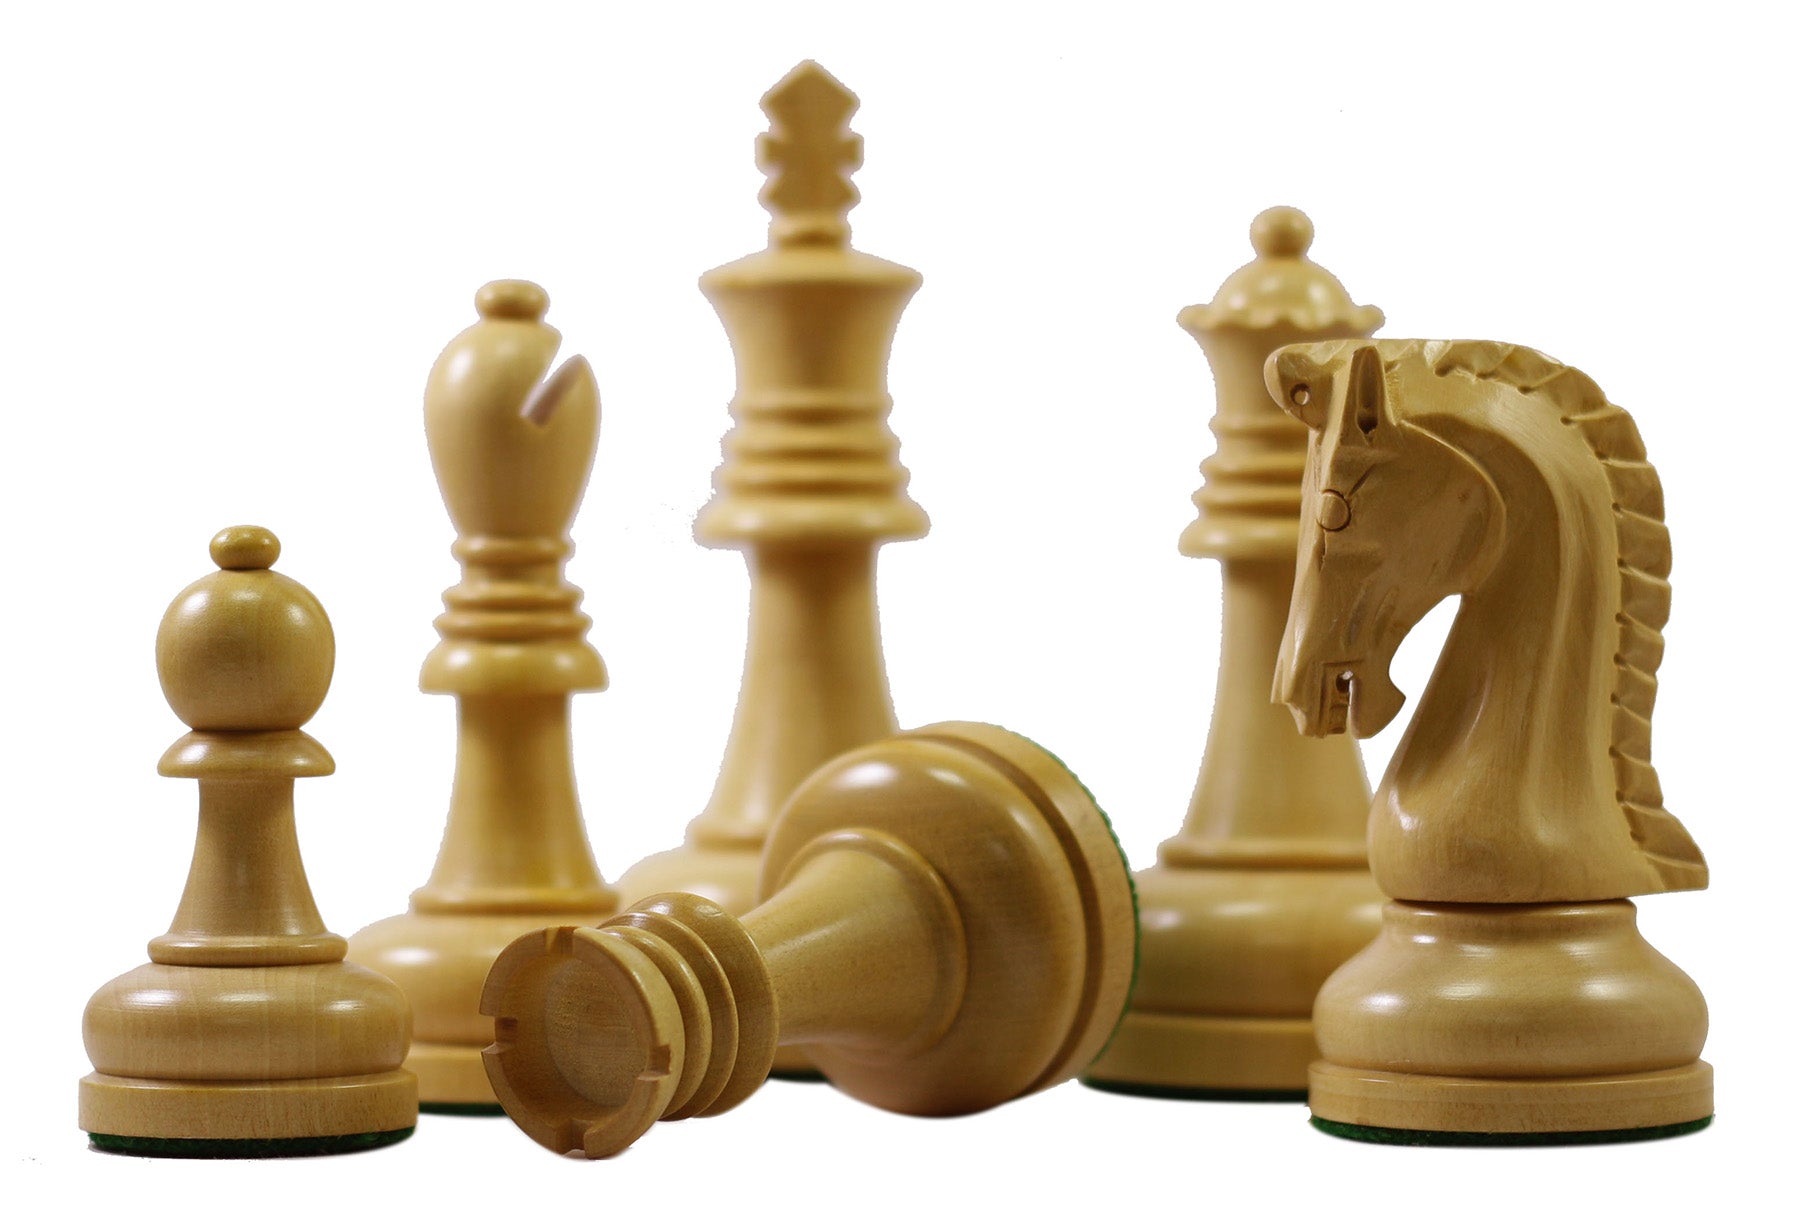 Augusta Series 4.125" Premium Staunton Chess Set in Ebony and Box Wood